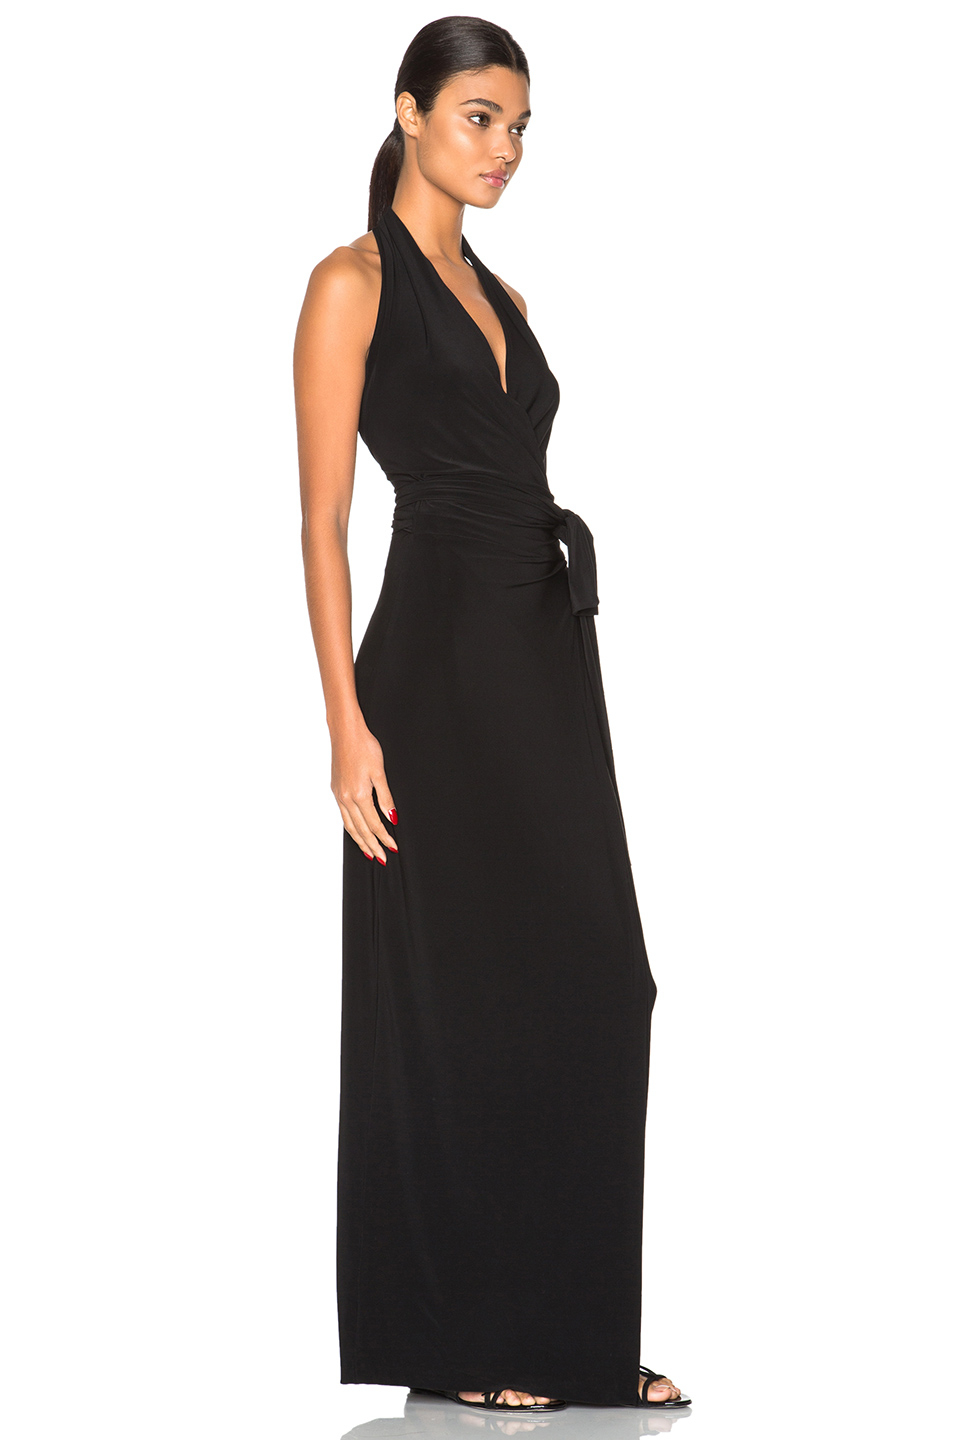 Norma Kamali Synthetic Halter Wrap Dress in Black - Lyst